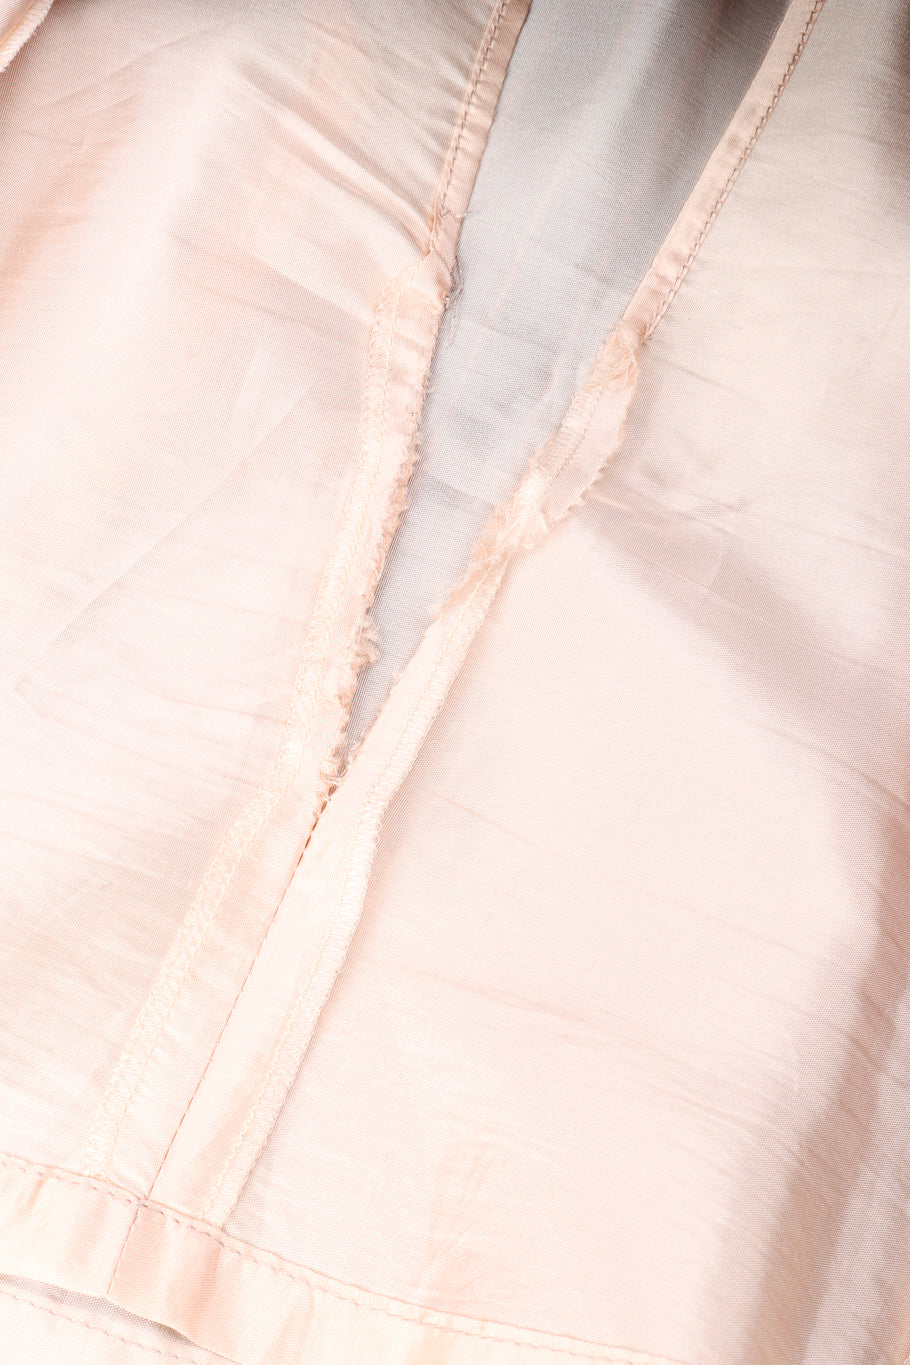 Peplum Flare Jacket & Skirt Suit by Vivienne Westwood lining stitching undone @recessla